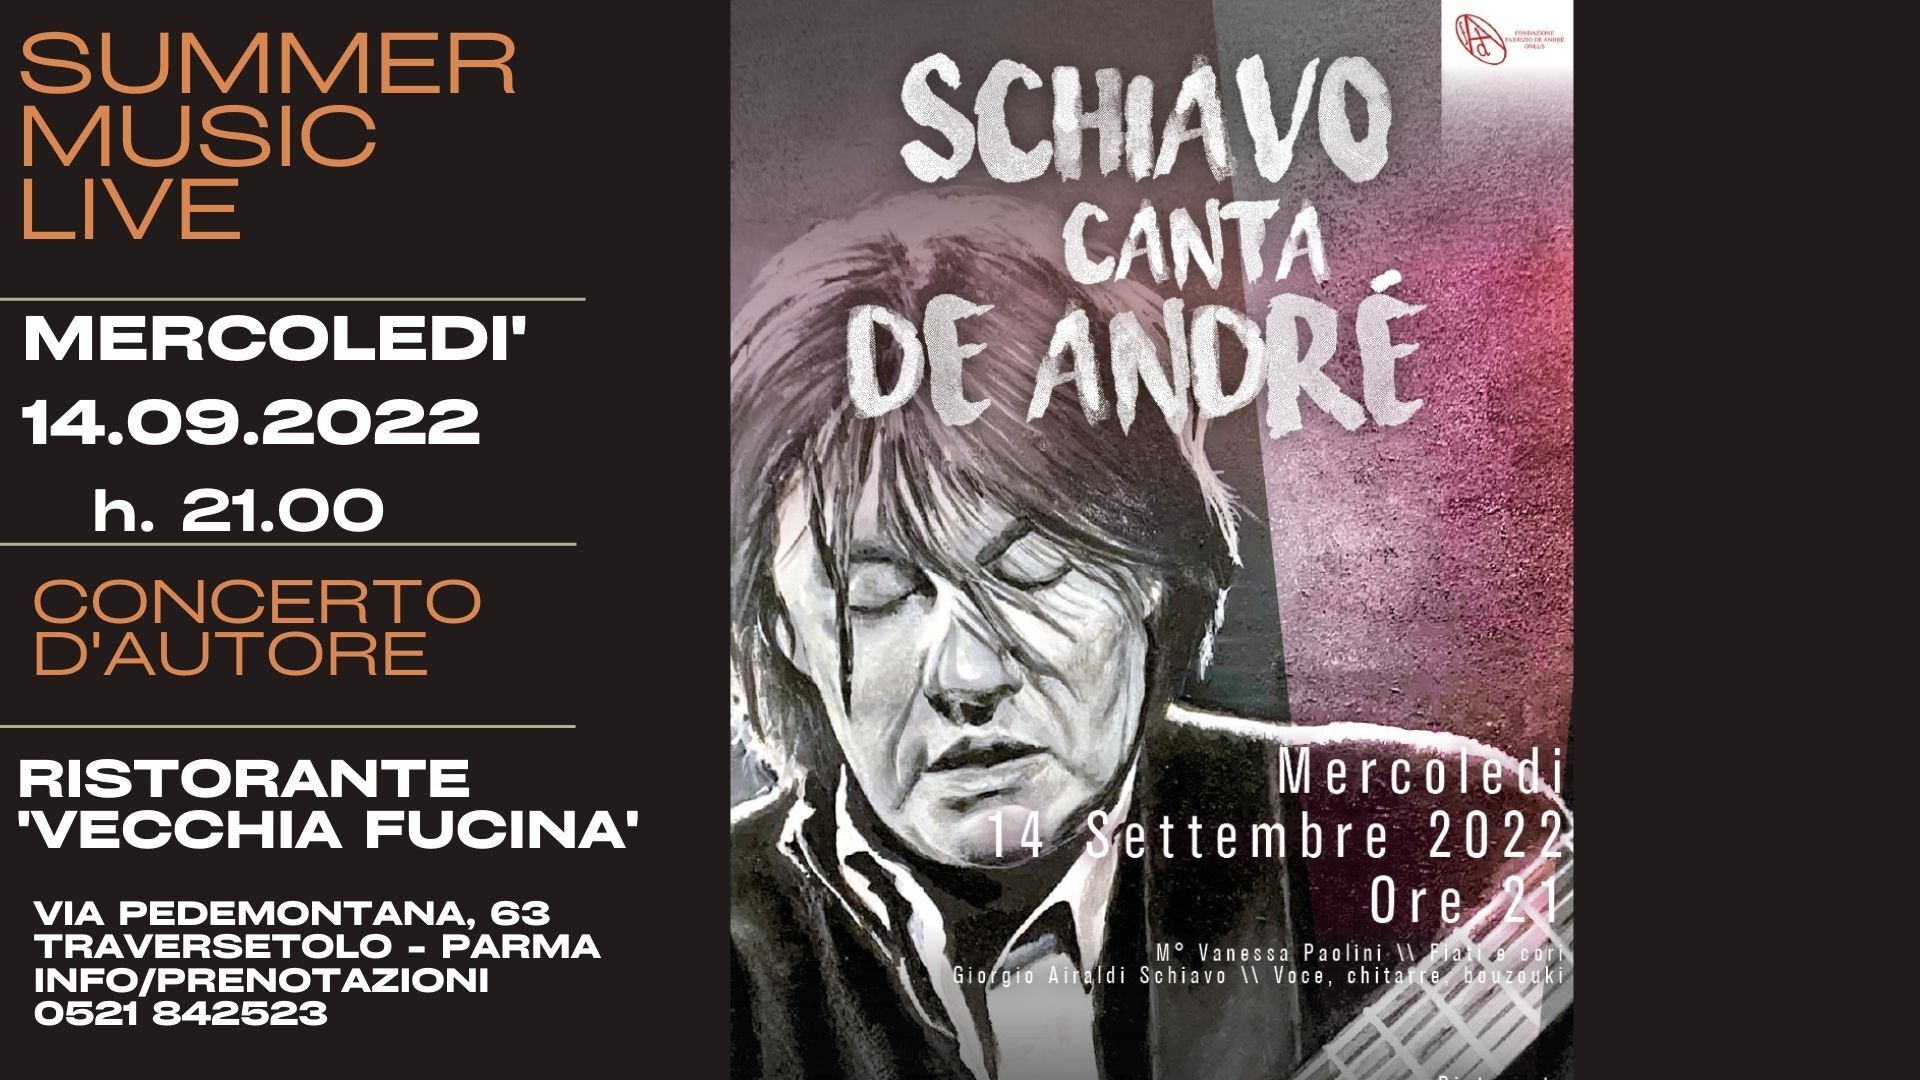 Mercoledì è Music live alla Vecchia Fucina : "Schiavo canta De André"